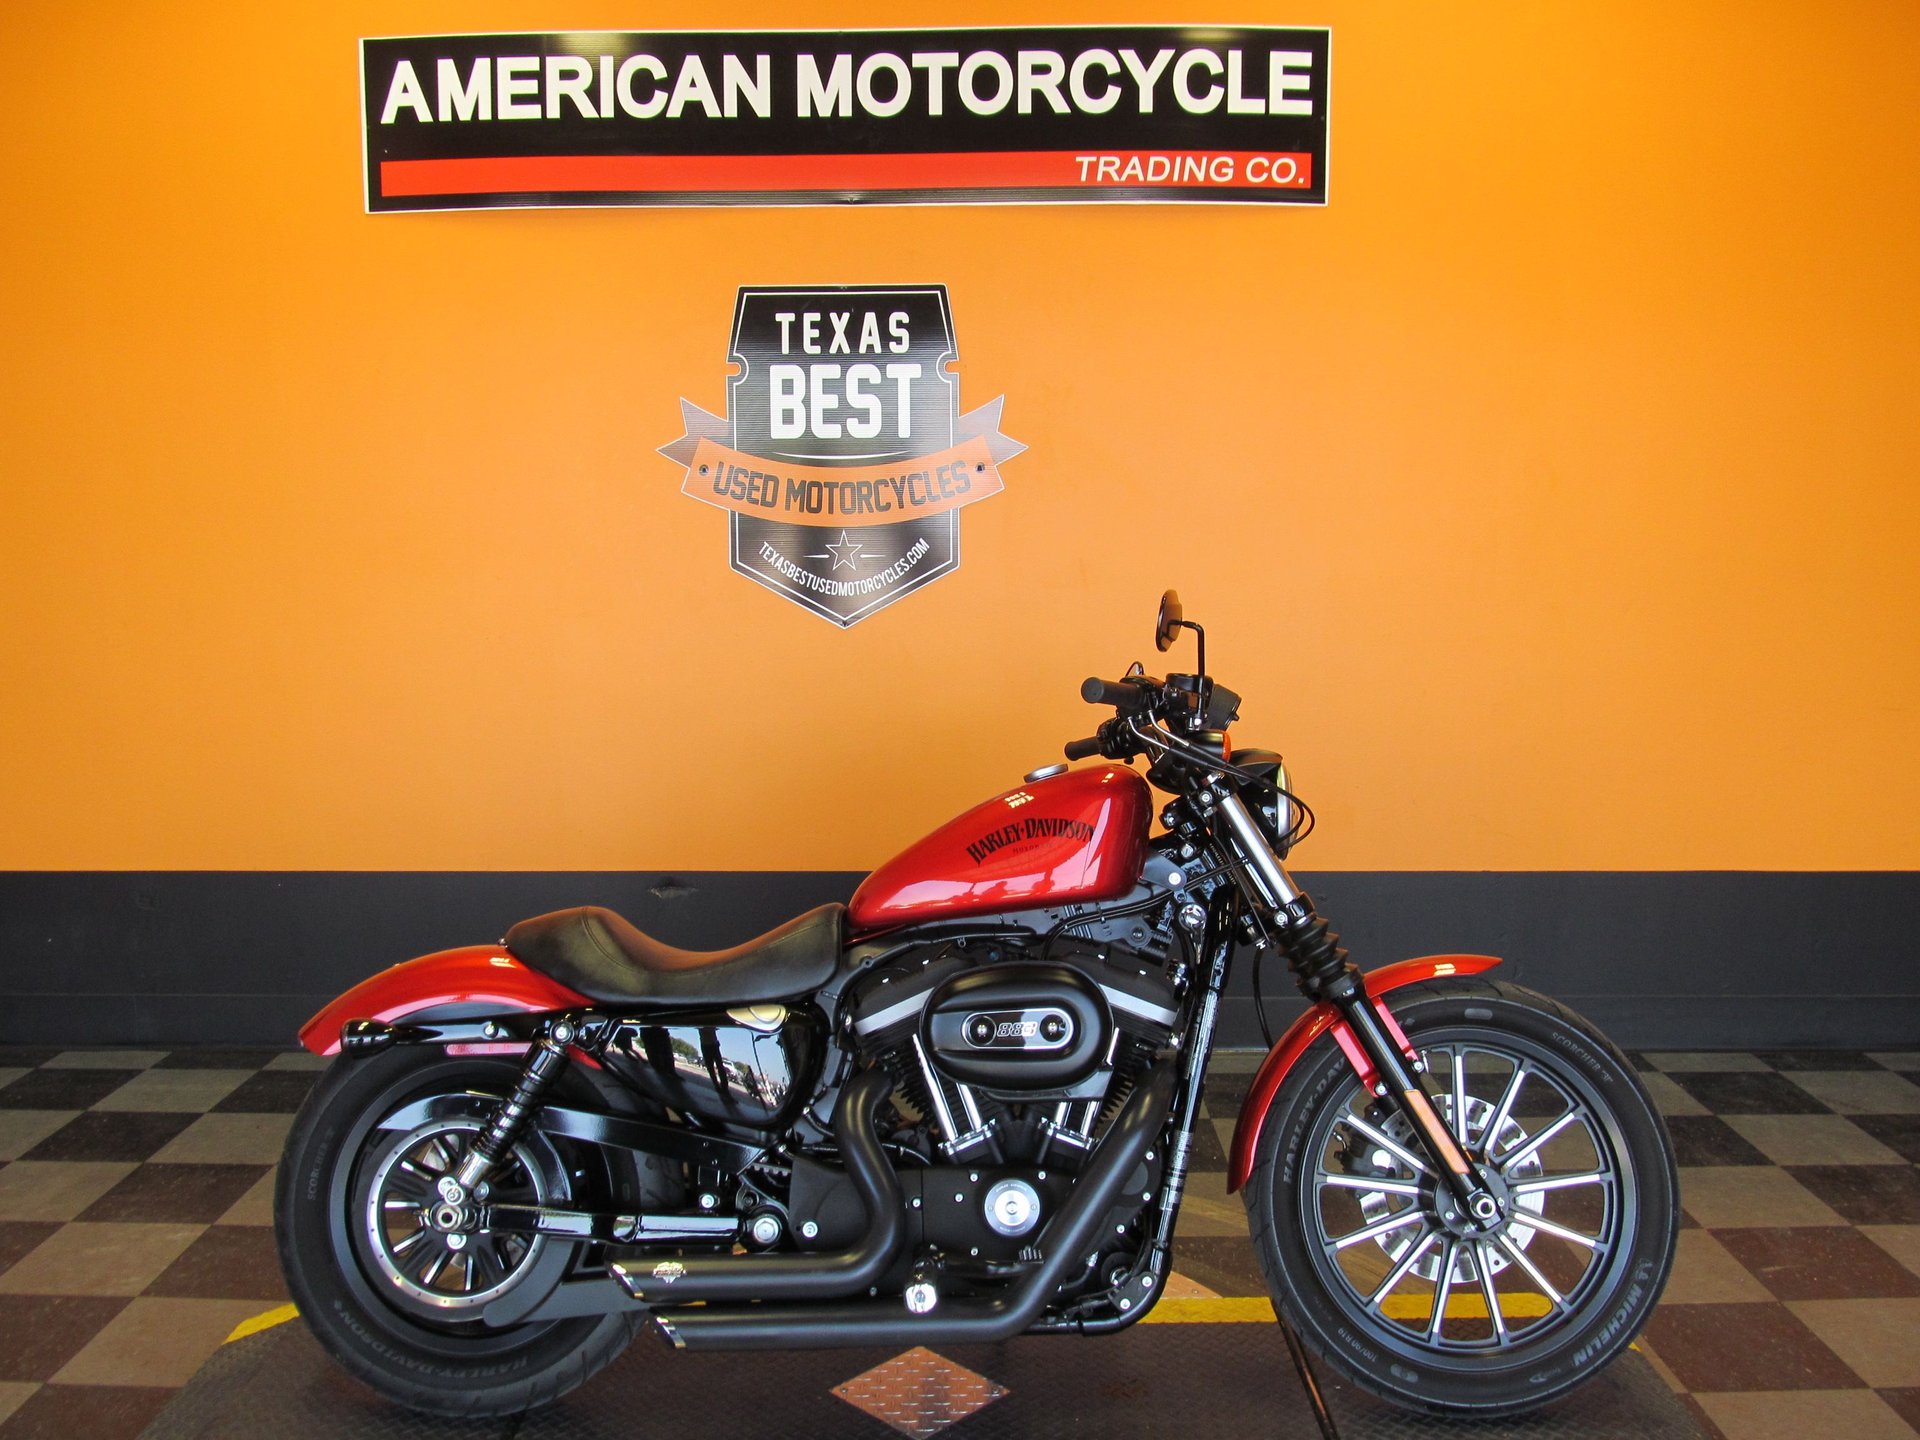 2013 Harley-Davidson Sportster 883 | American Motorcycle Trading Company -  Used Harley Davidson Motorcycles